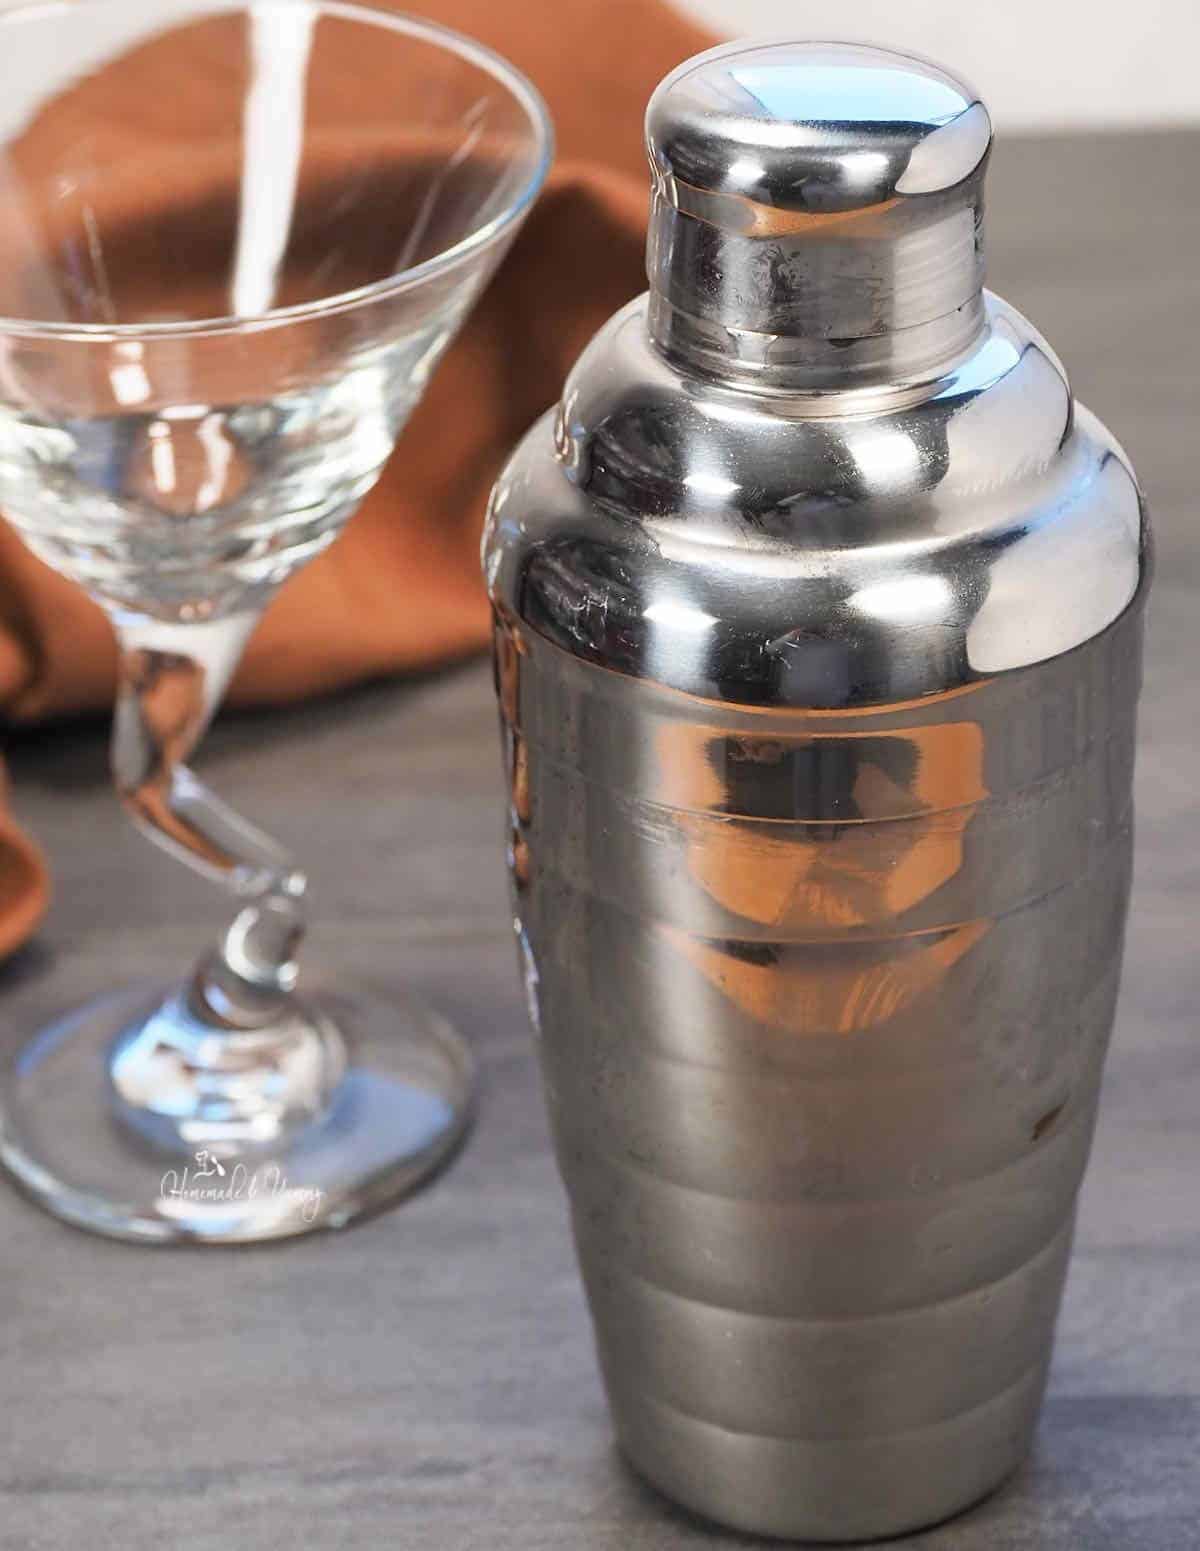 Martini glass and martini shaker.